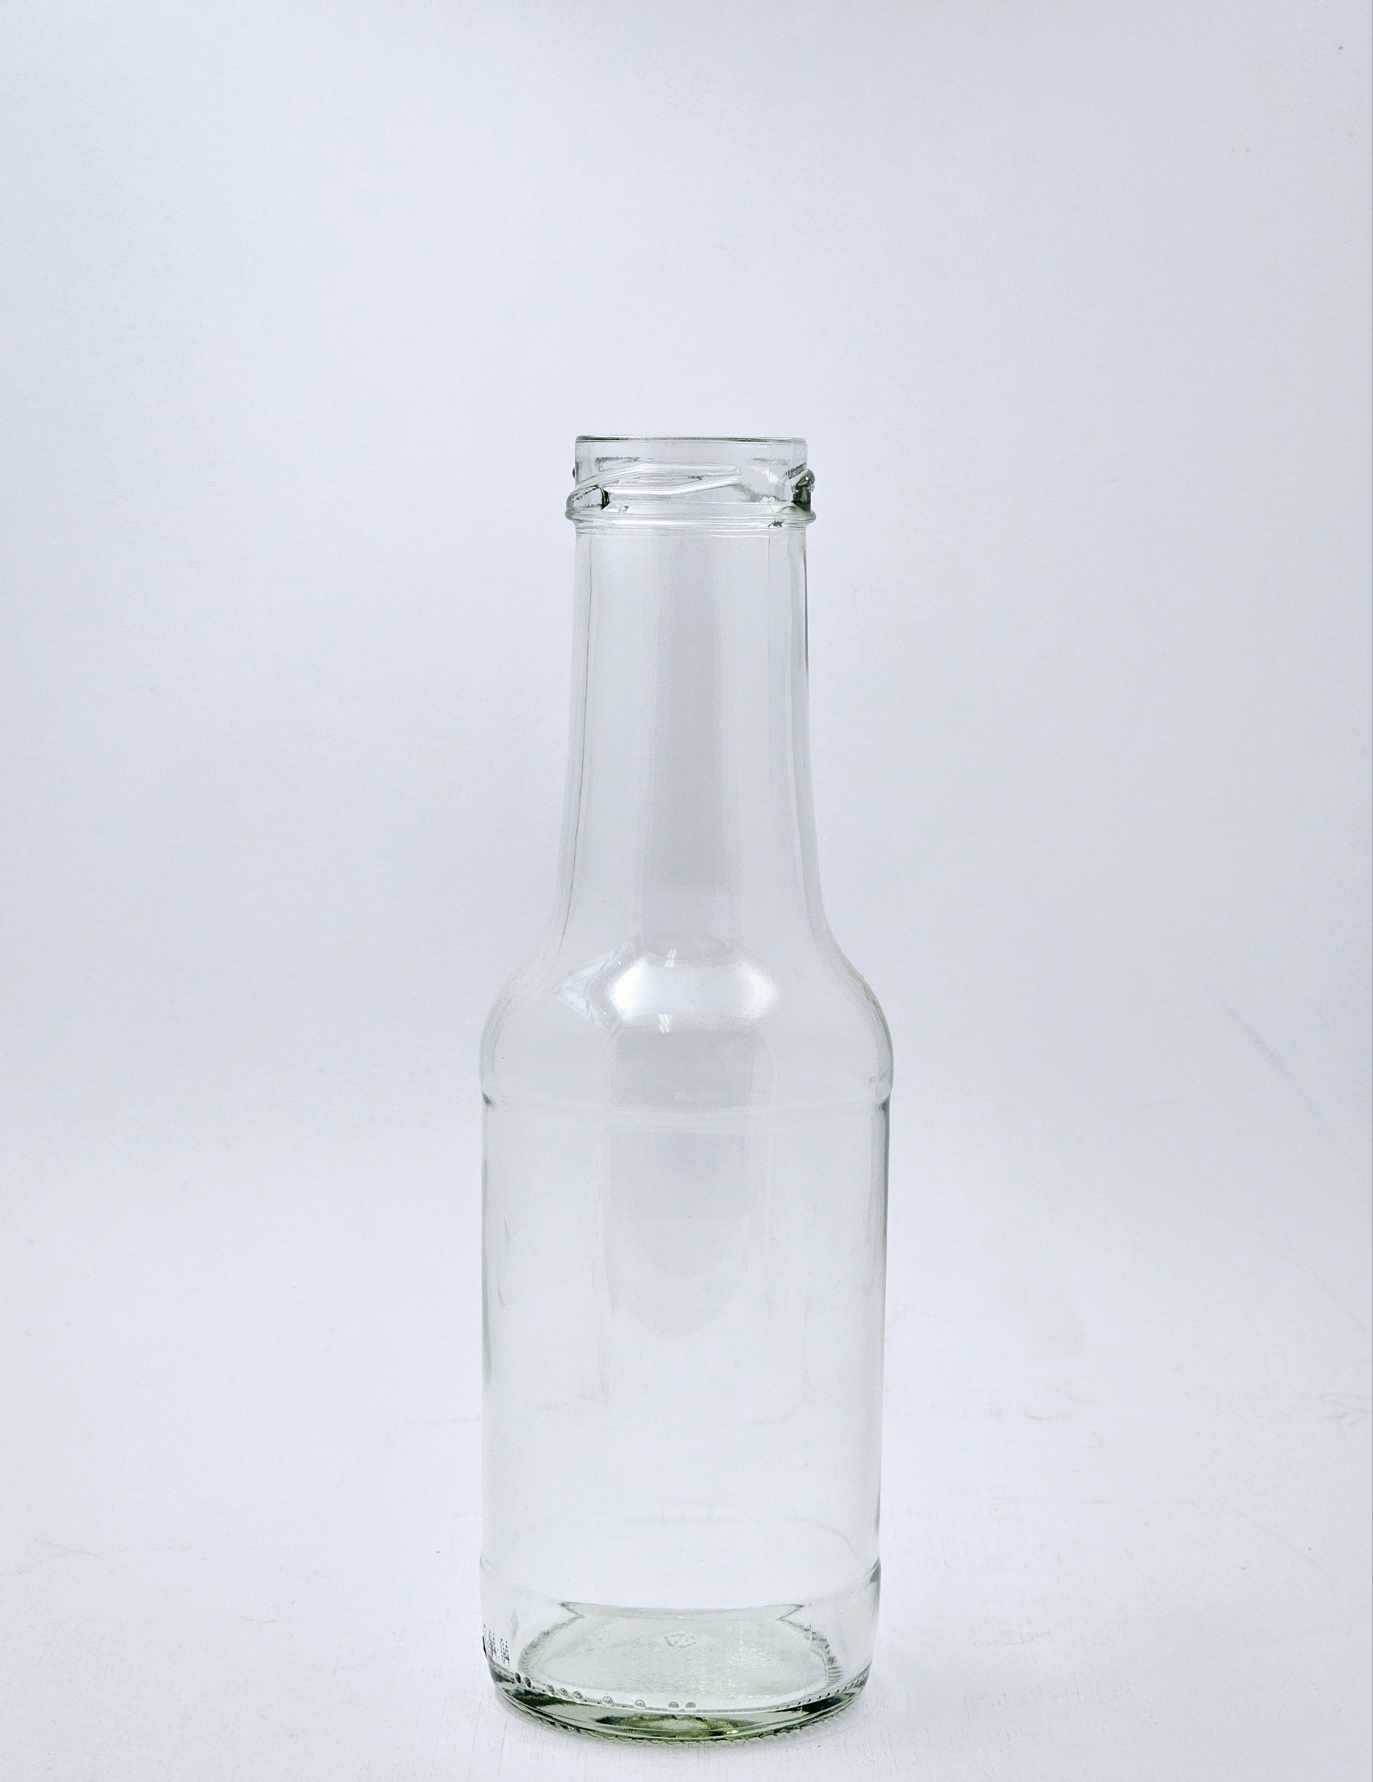 300ml Sauce Bottle with 38mm Twist Cap - 53 Bottles and Caps per Carton $1.49c (BottleandCapcombo)